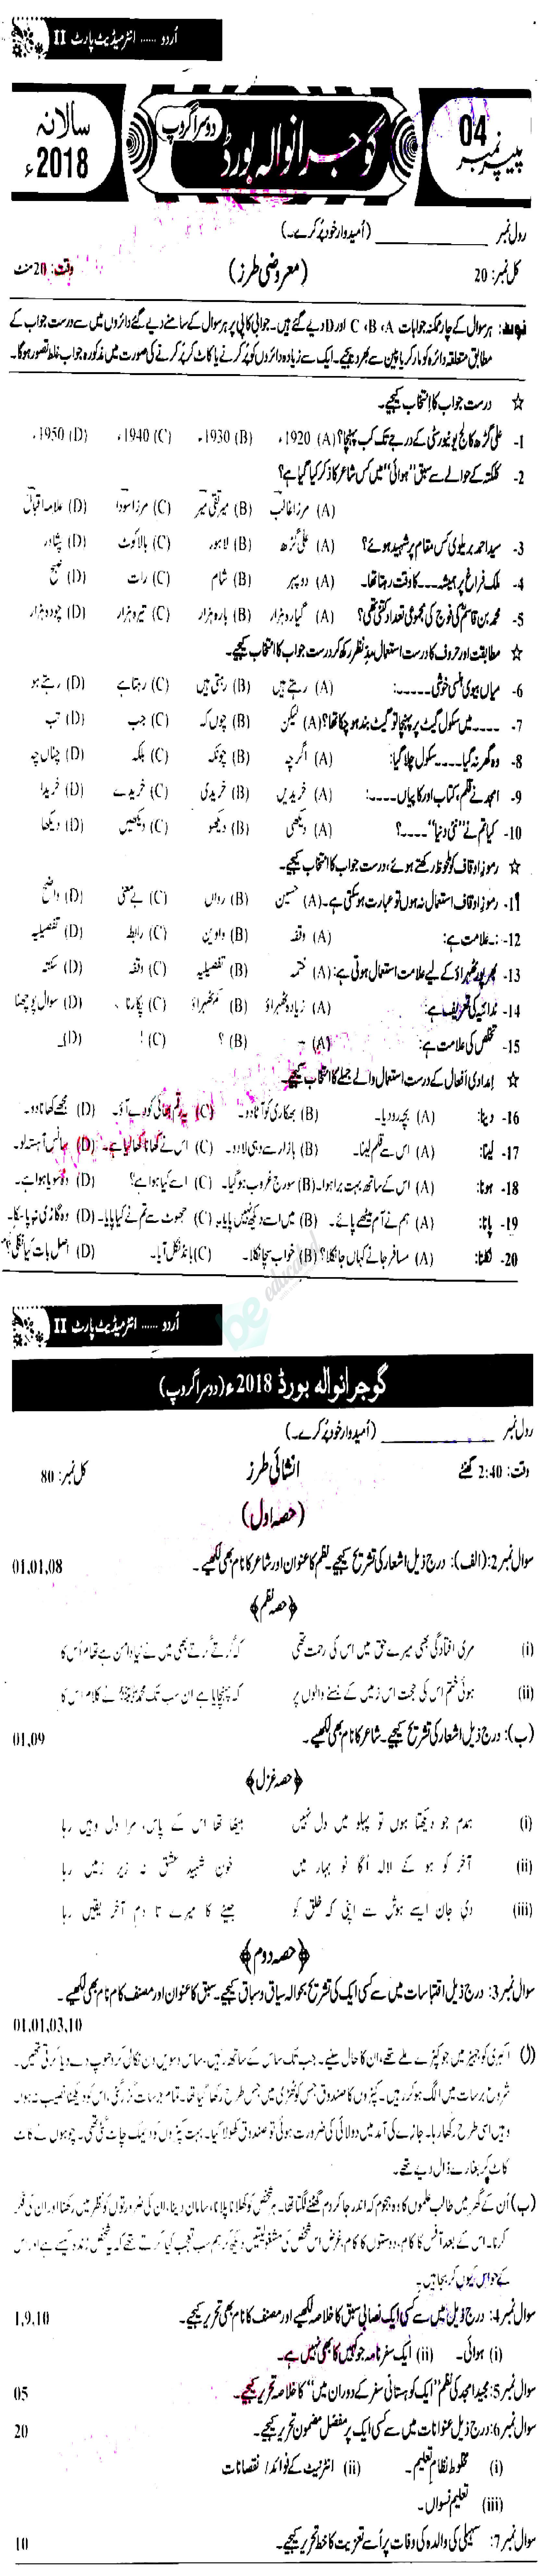 Urdu 12th class Past Paper Group 2 BISE Gujranwala 2018